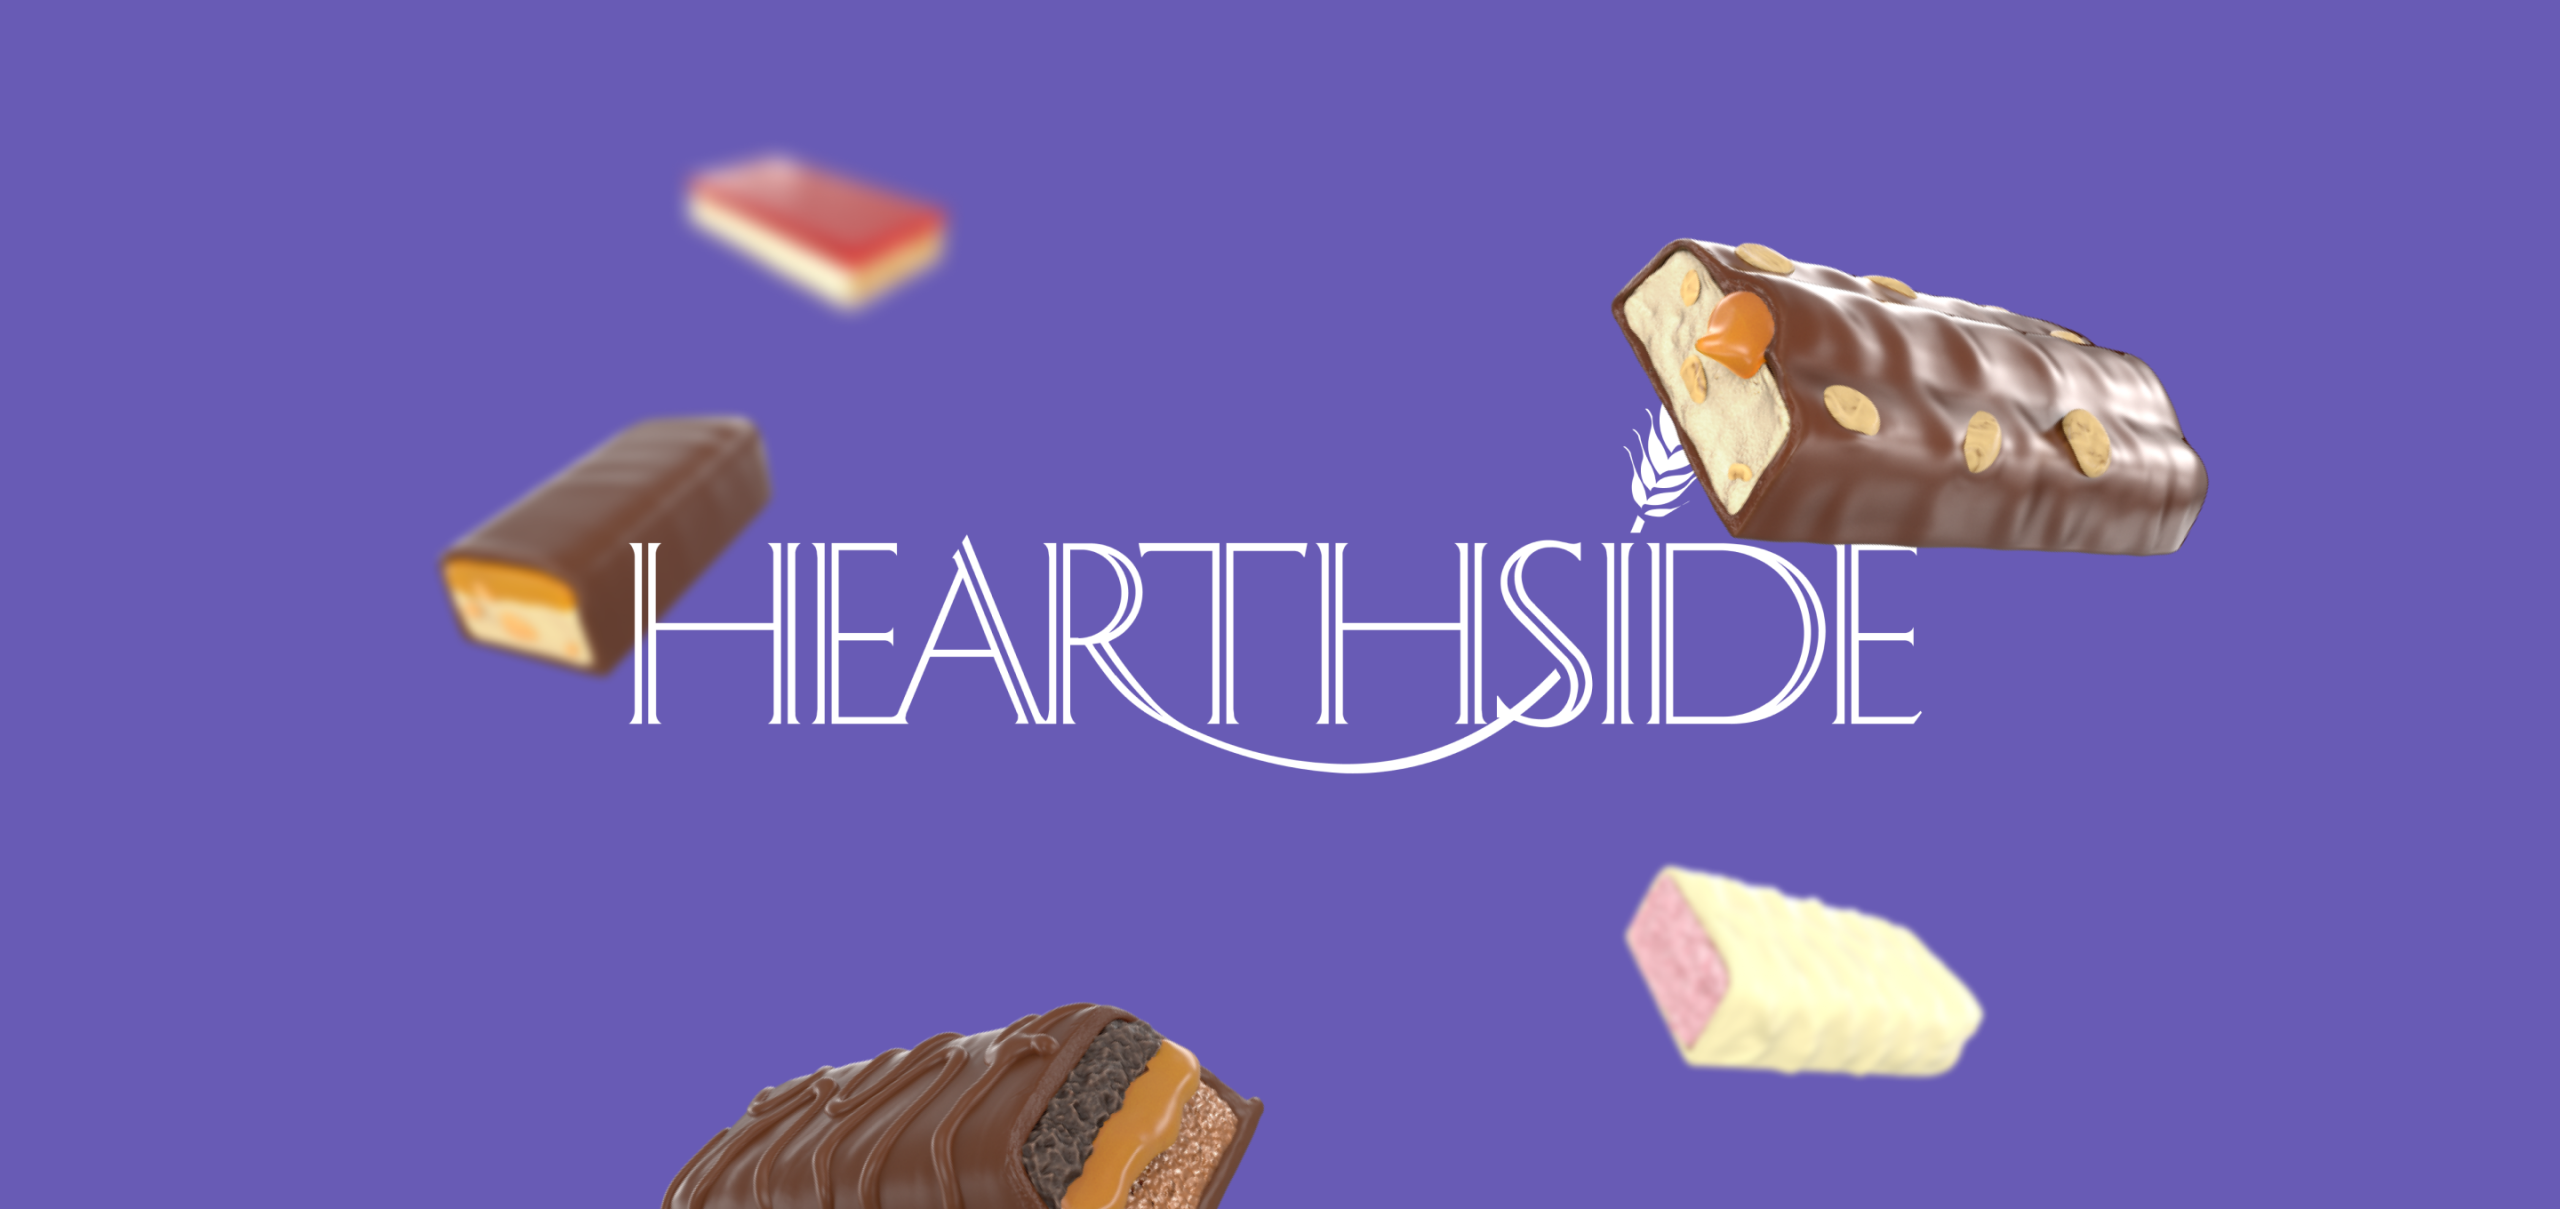 Hearthside Hero Desktop